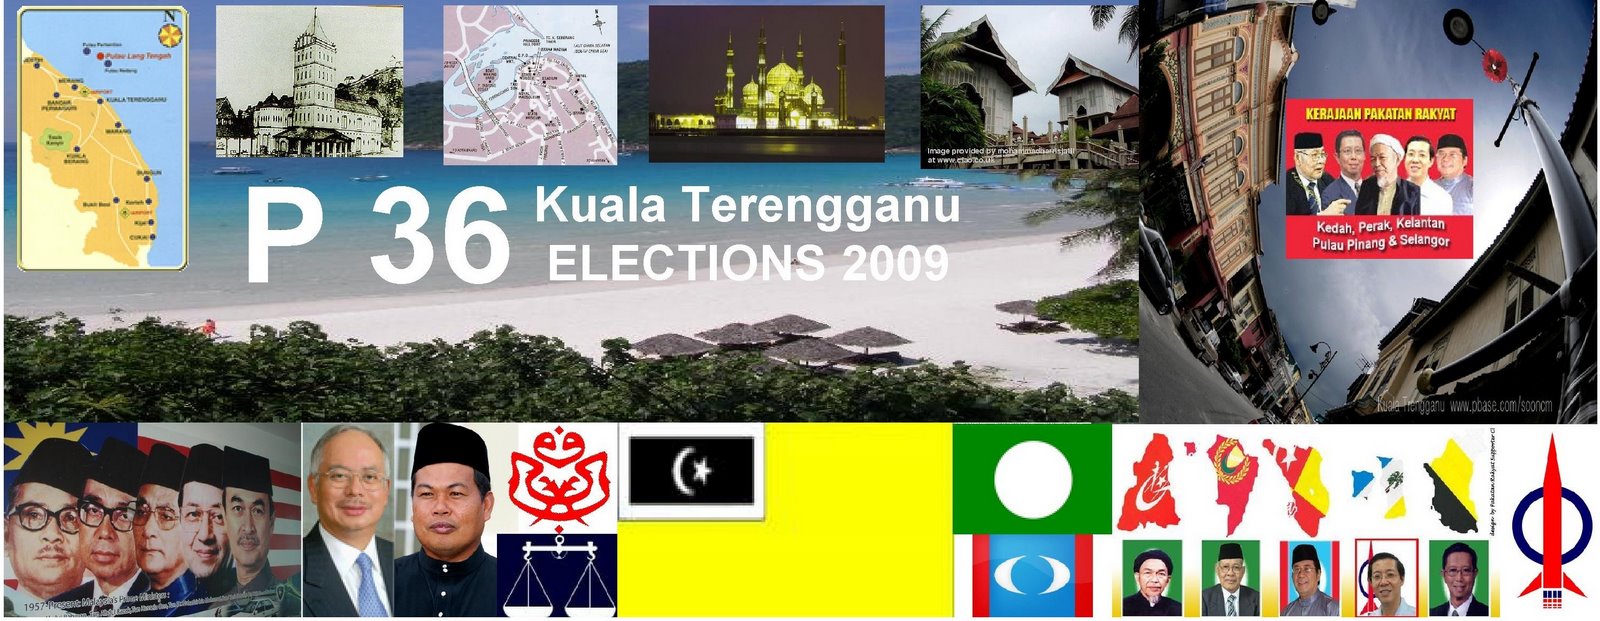 Kuala Trengganu ELECTIONS 2009